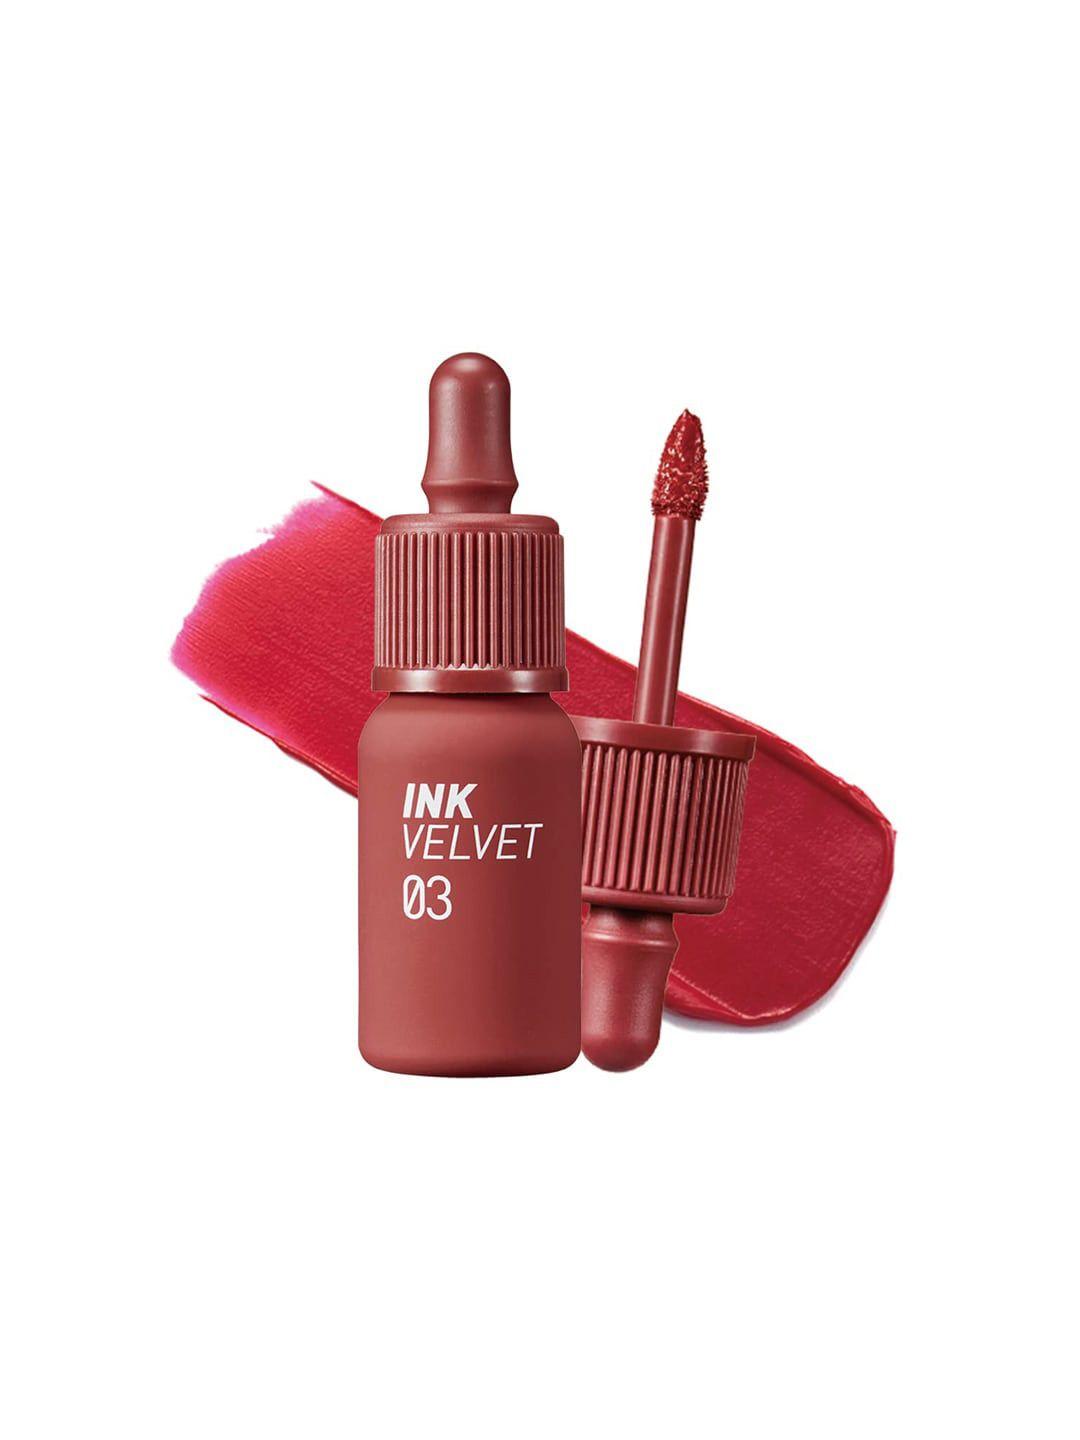 peripera ink velvet long-lasting liquid lipstick - red only 03